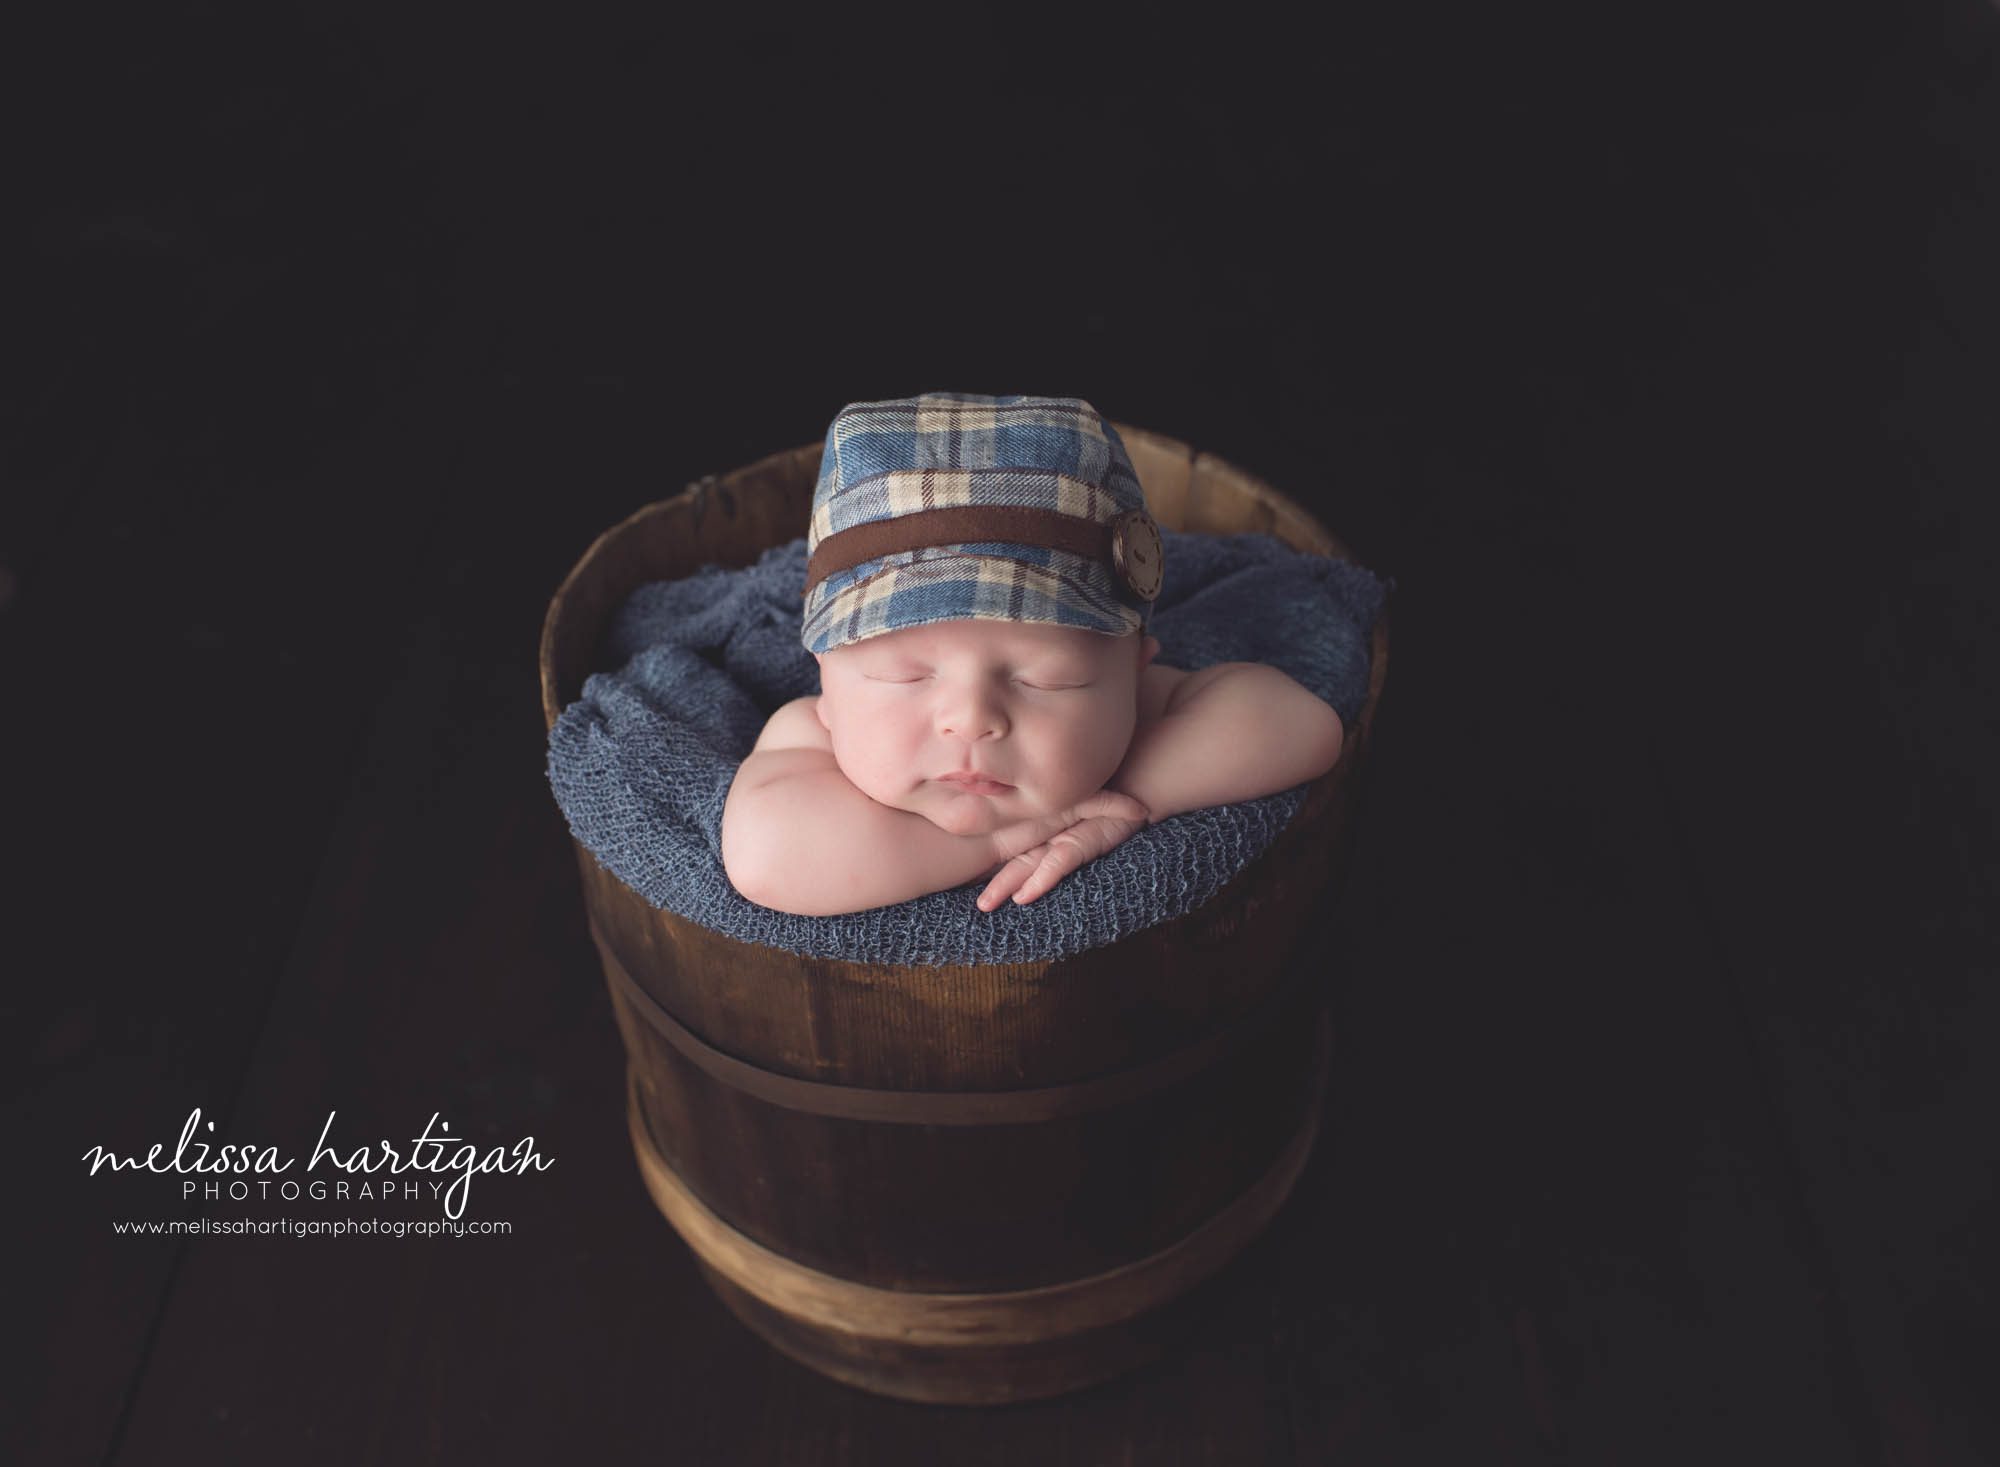 Newborn photographer CT newborn pose baby in barrel with plaid hat